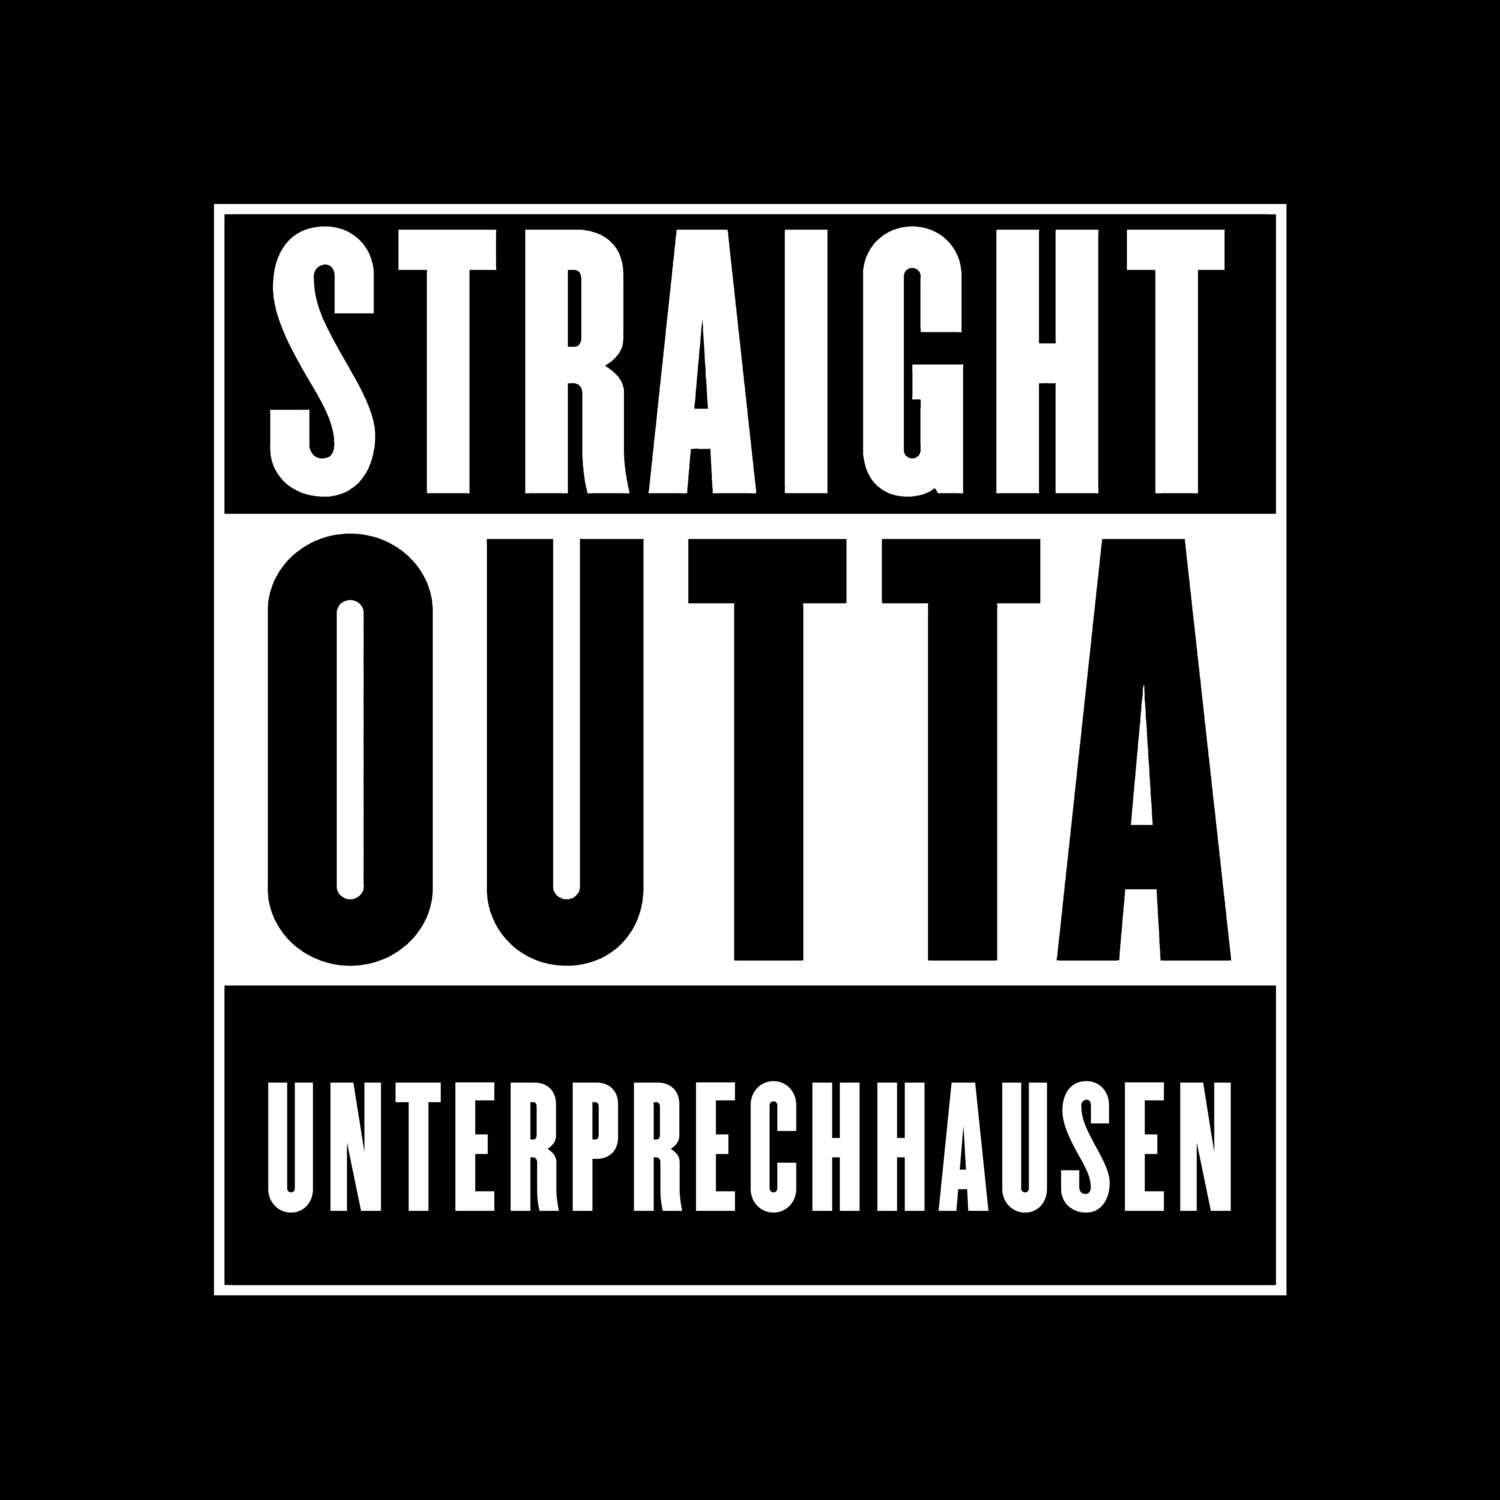 Unterprechhausen T-Shirt »Straight Outta«